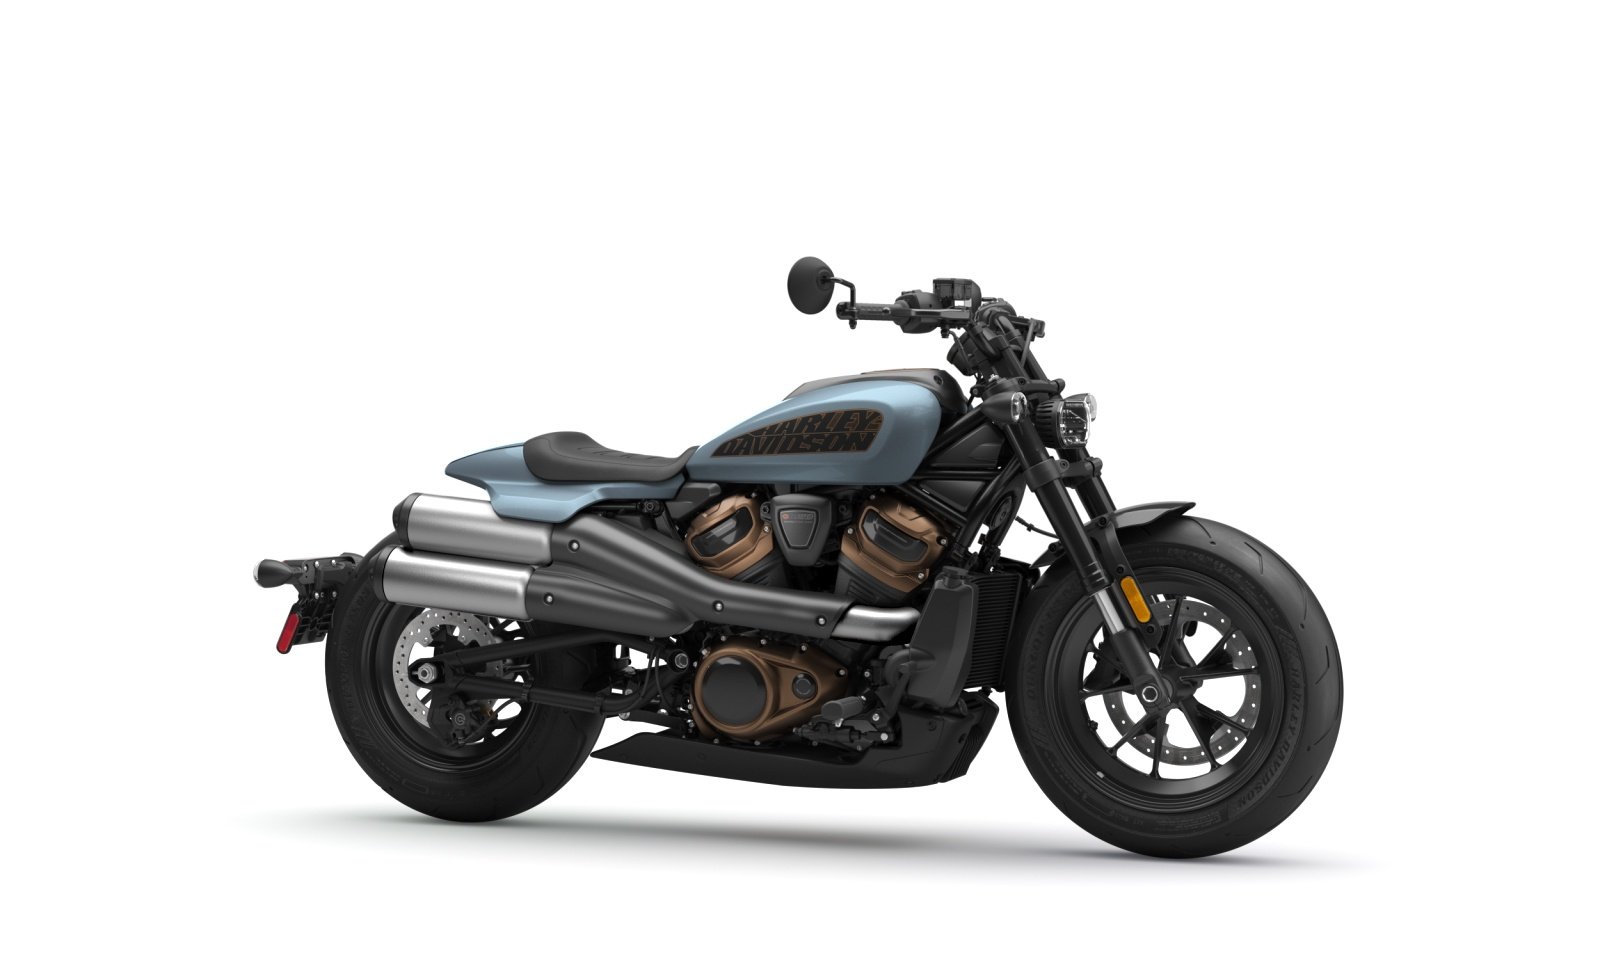 2022 Harley-Davidson Sportster Iron 883 First Look